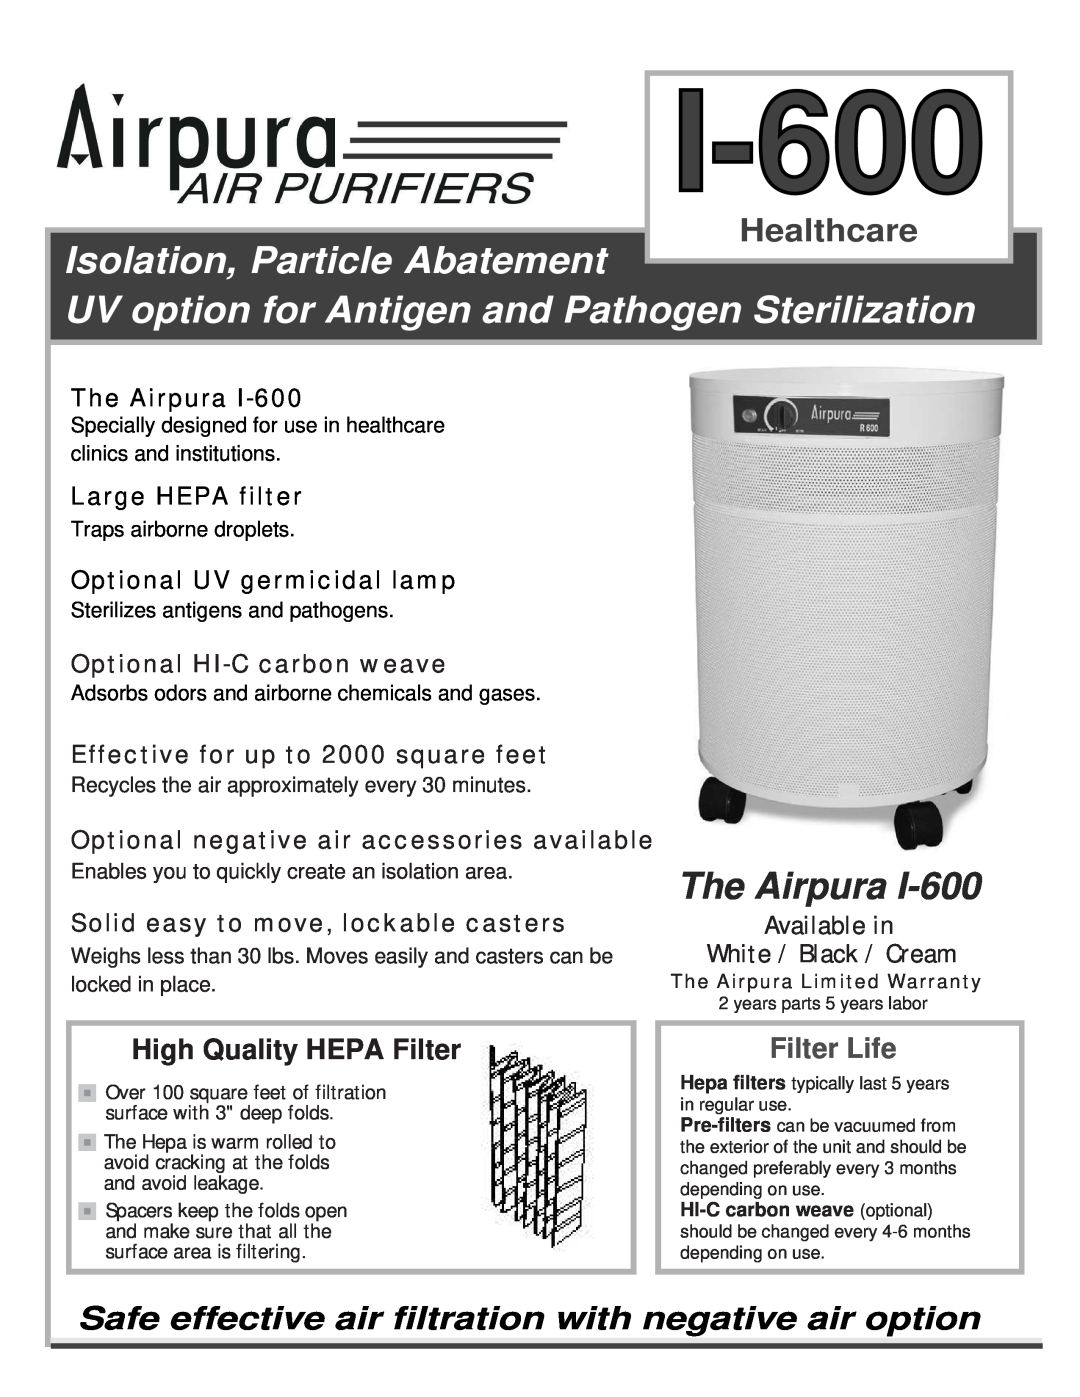 Airpura Industries I-600 warranty Healthcare, The Airpura, Large HEPA filter, Optional UV germicidal lamp, Filter Life 